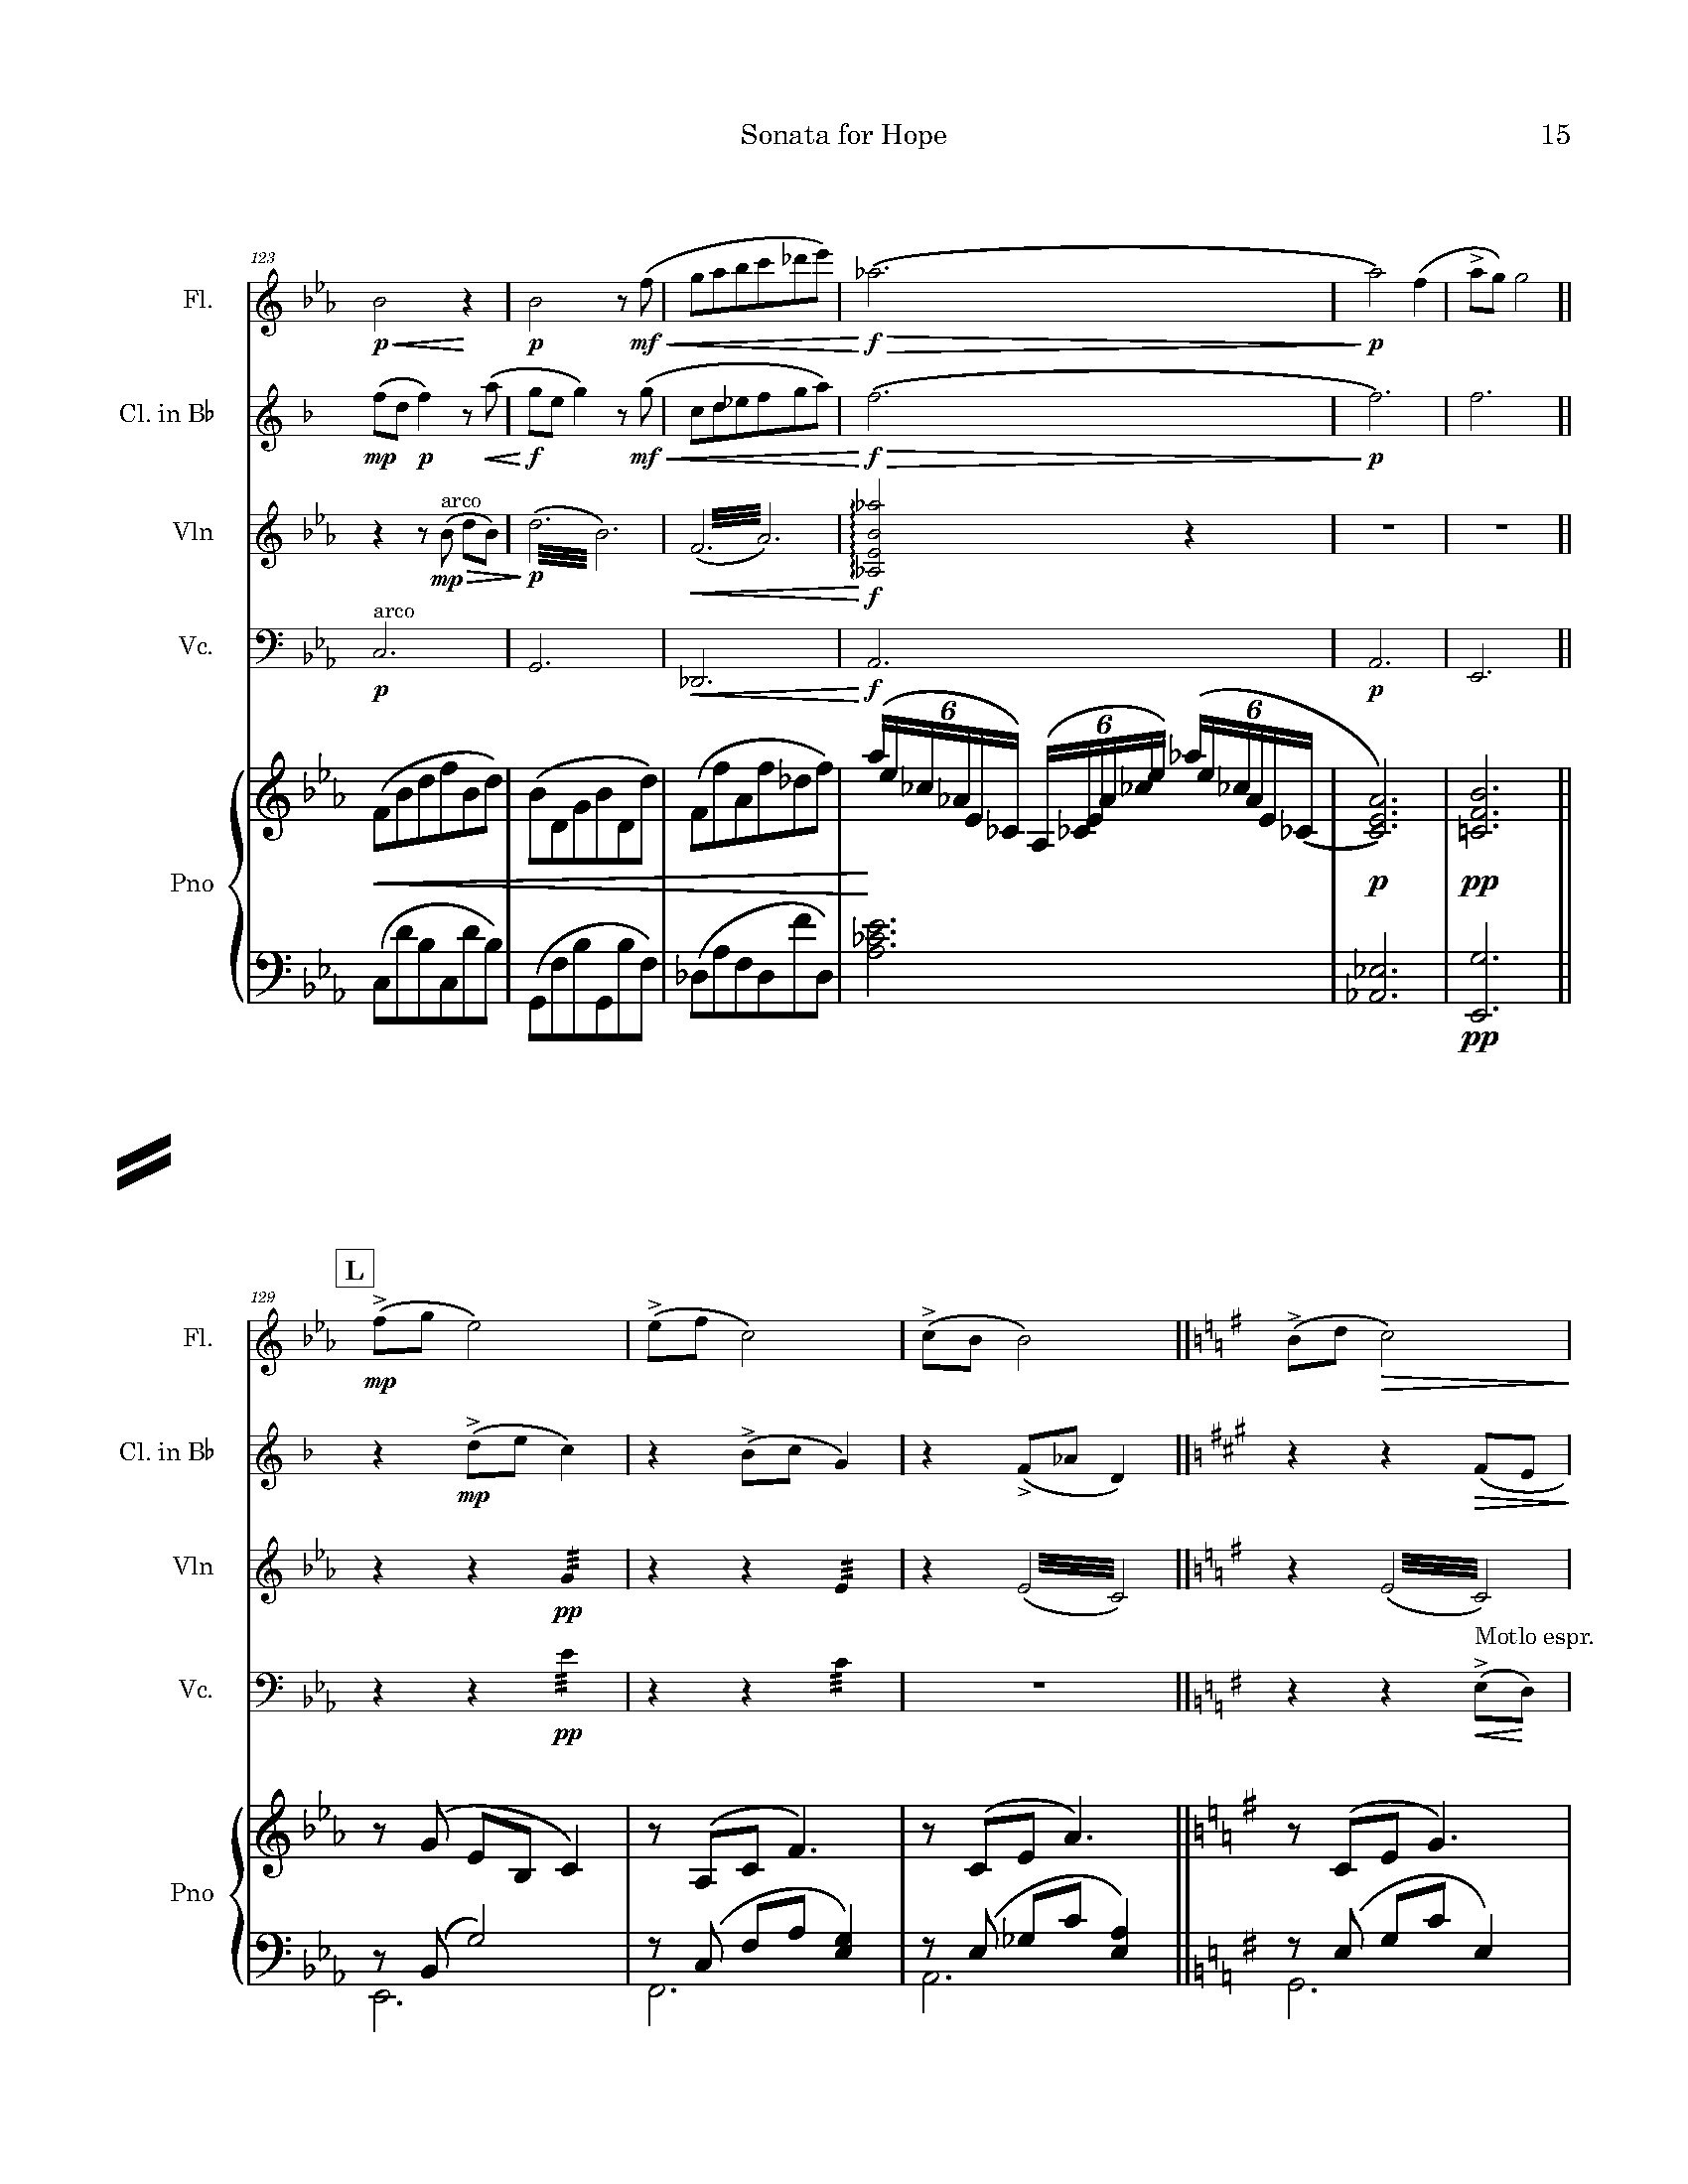 Sonata for Hope - Piano Score_Page_15.jpg